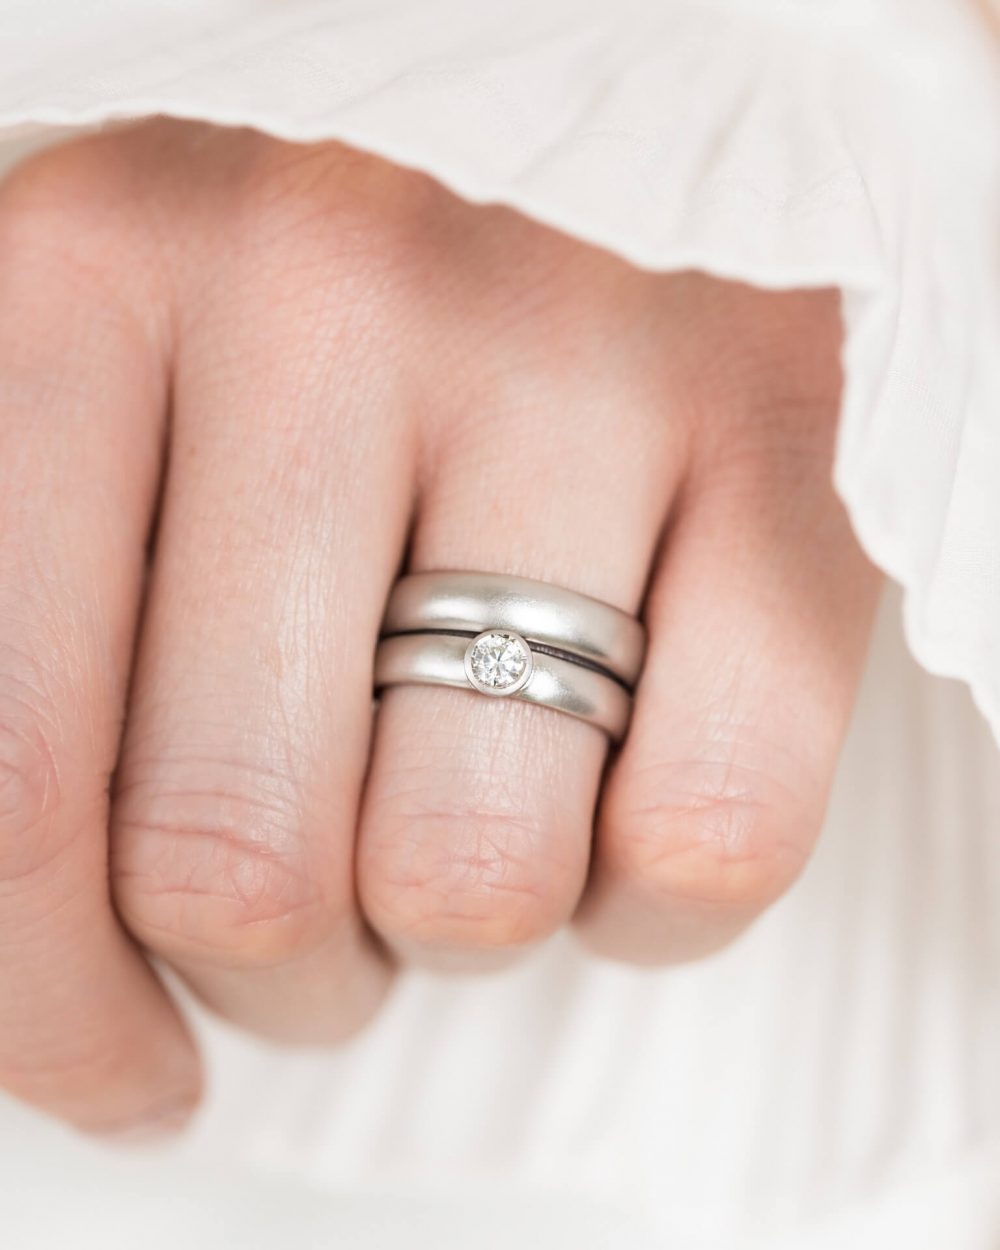 Diamond Engagement Ring With Wedding Ring Jacks Turner Bristol